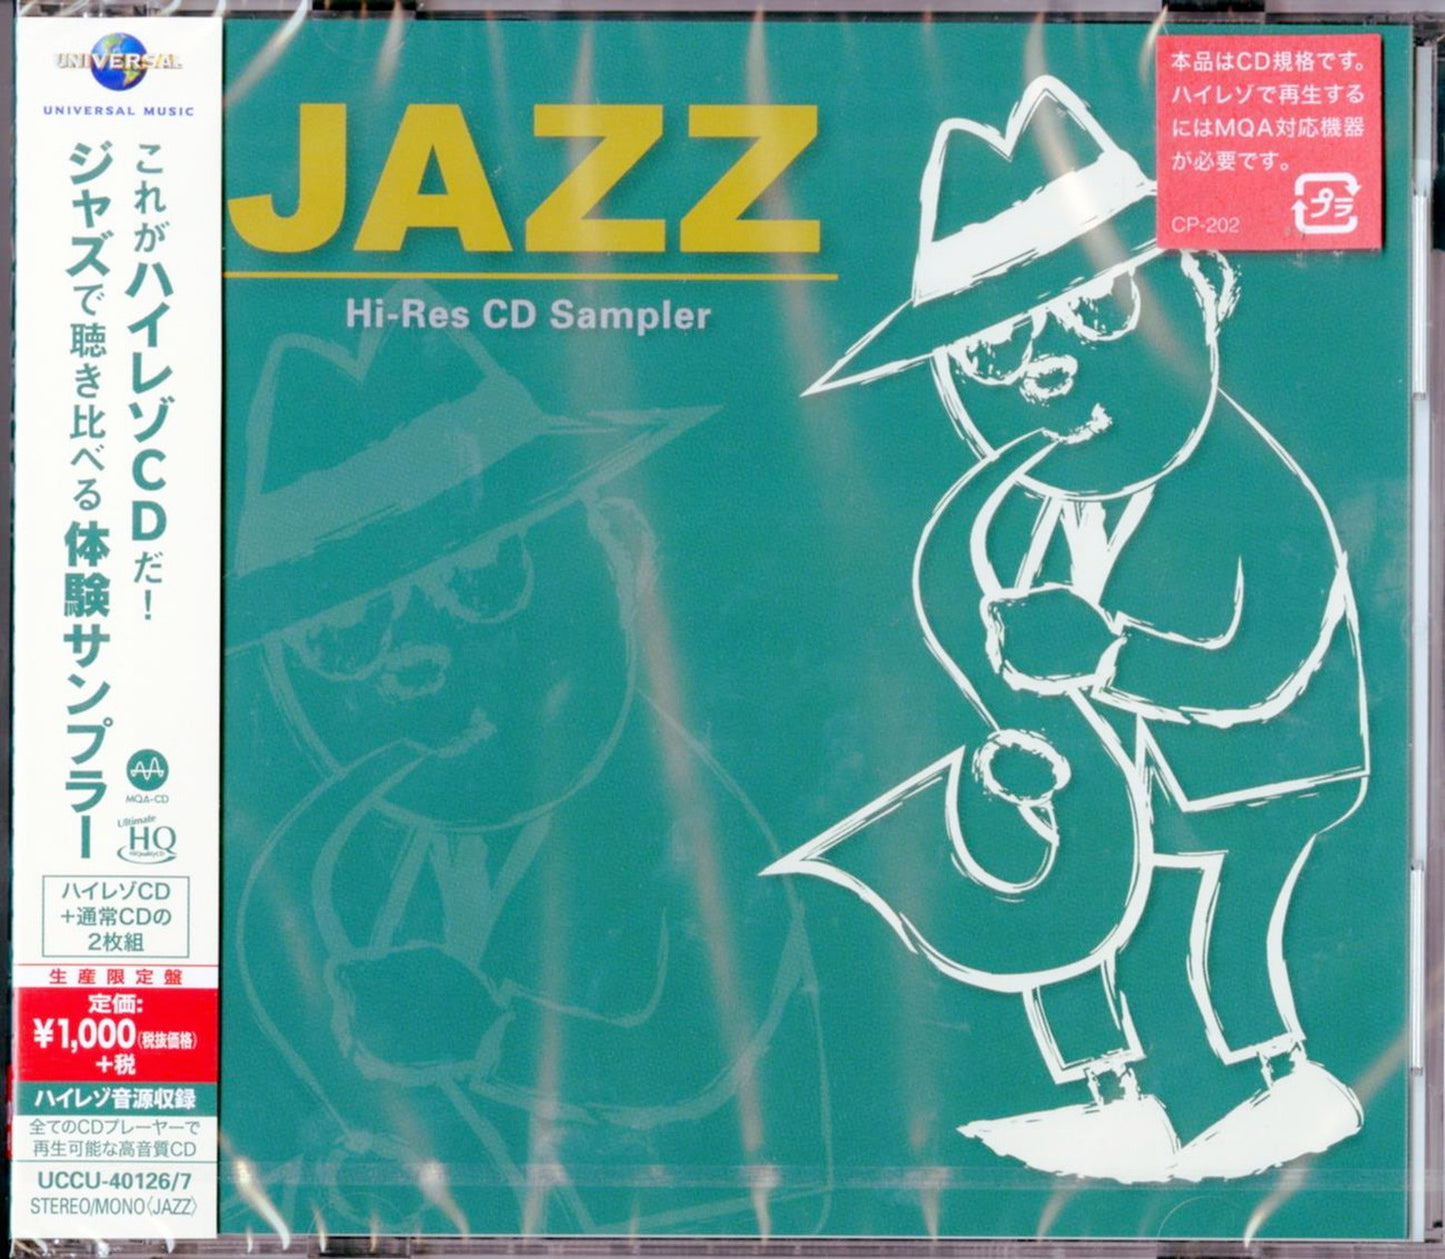 V.A. - Mqa-Cd Jazz Sampler - Japan  UHQCD+CD Limited Edition